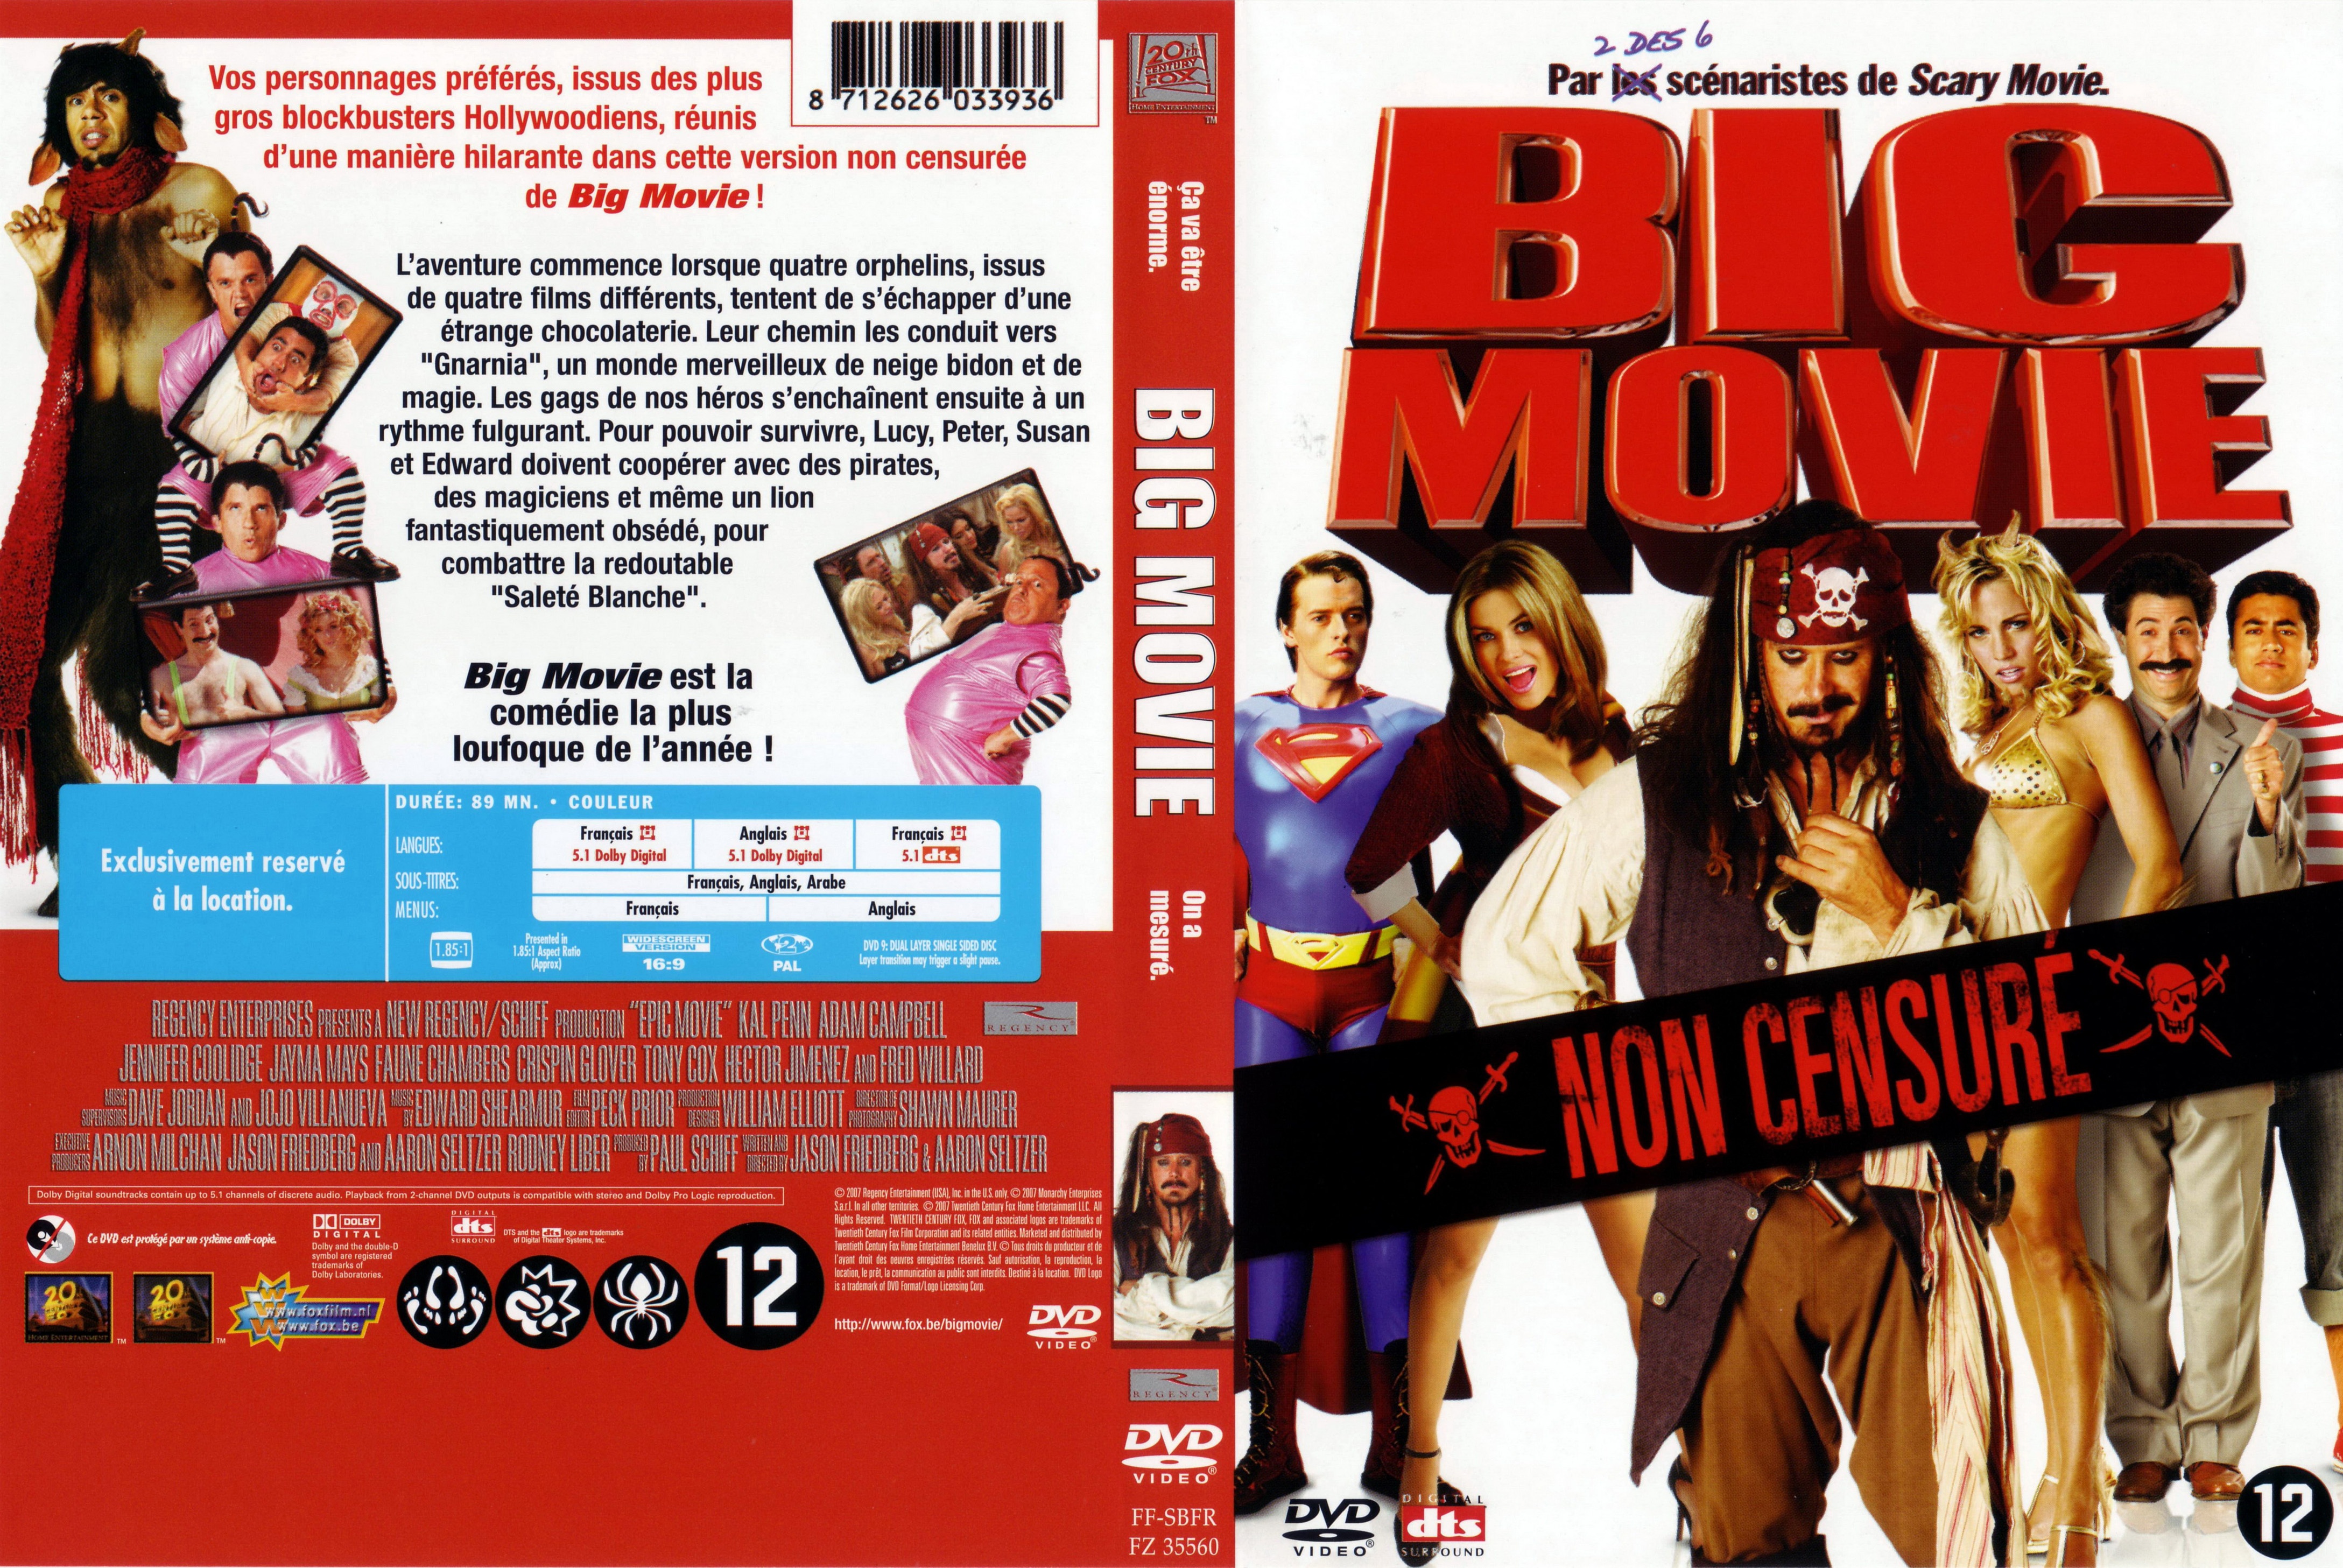 Jaquette DVD Big movie v2